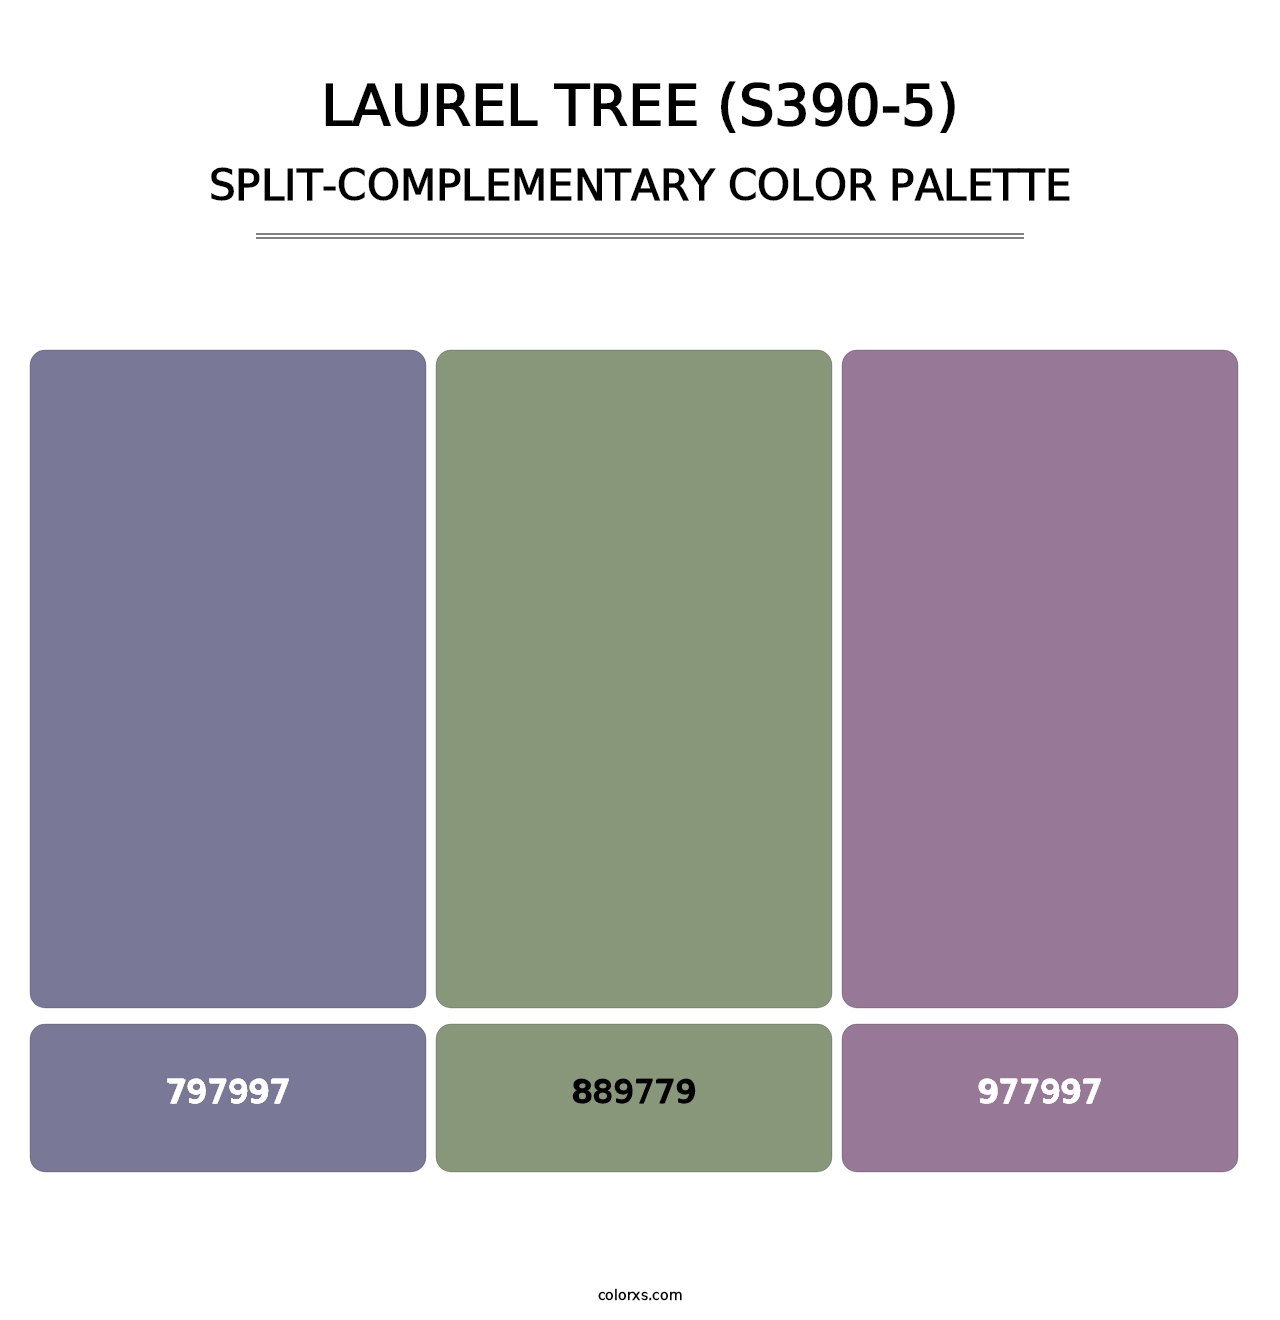 Laurel Tree (S390-5) - Split-Complementary Color Palette